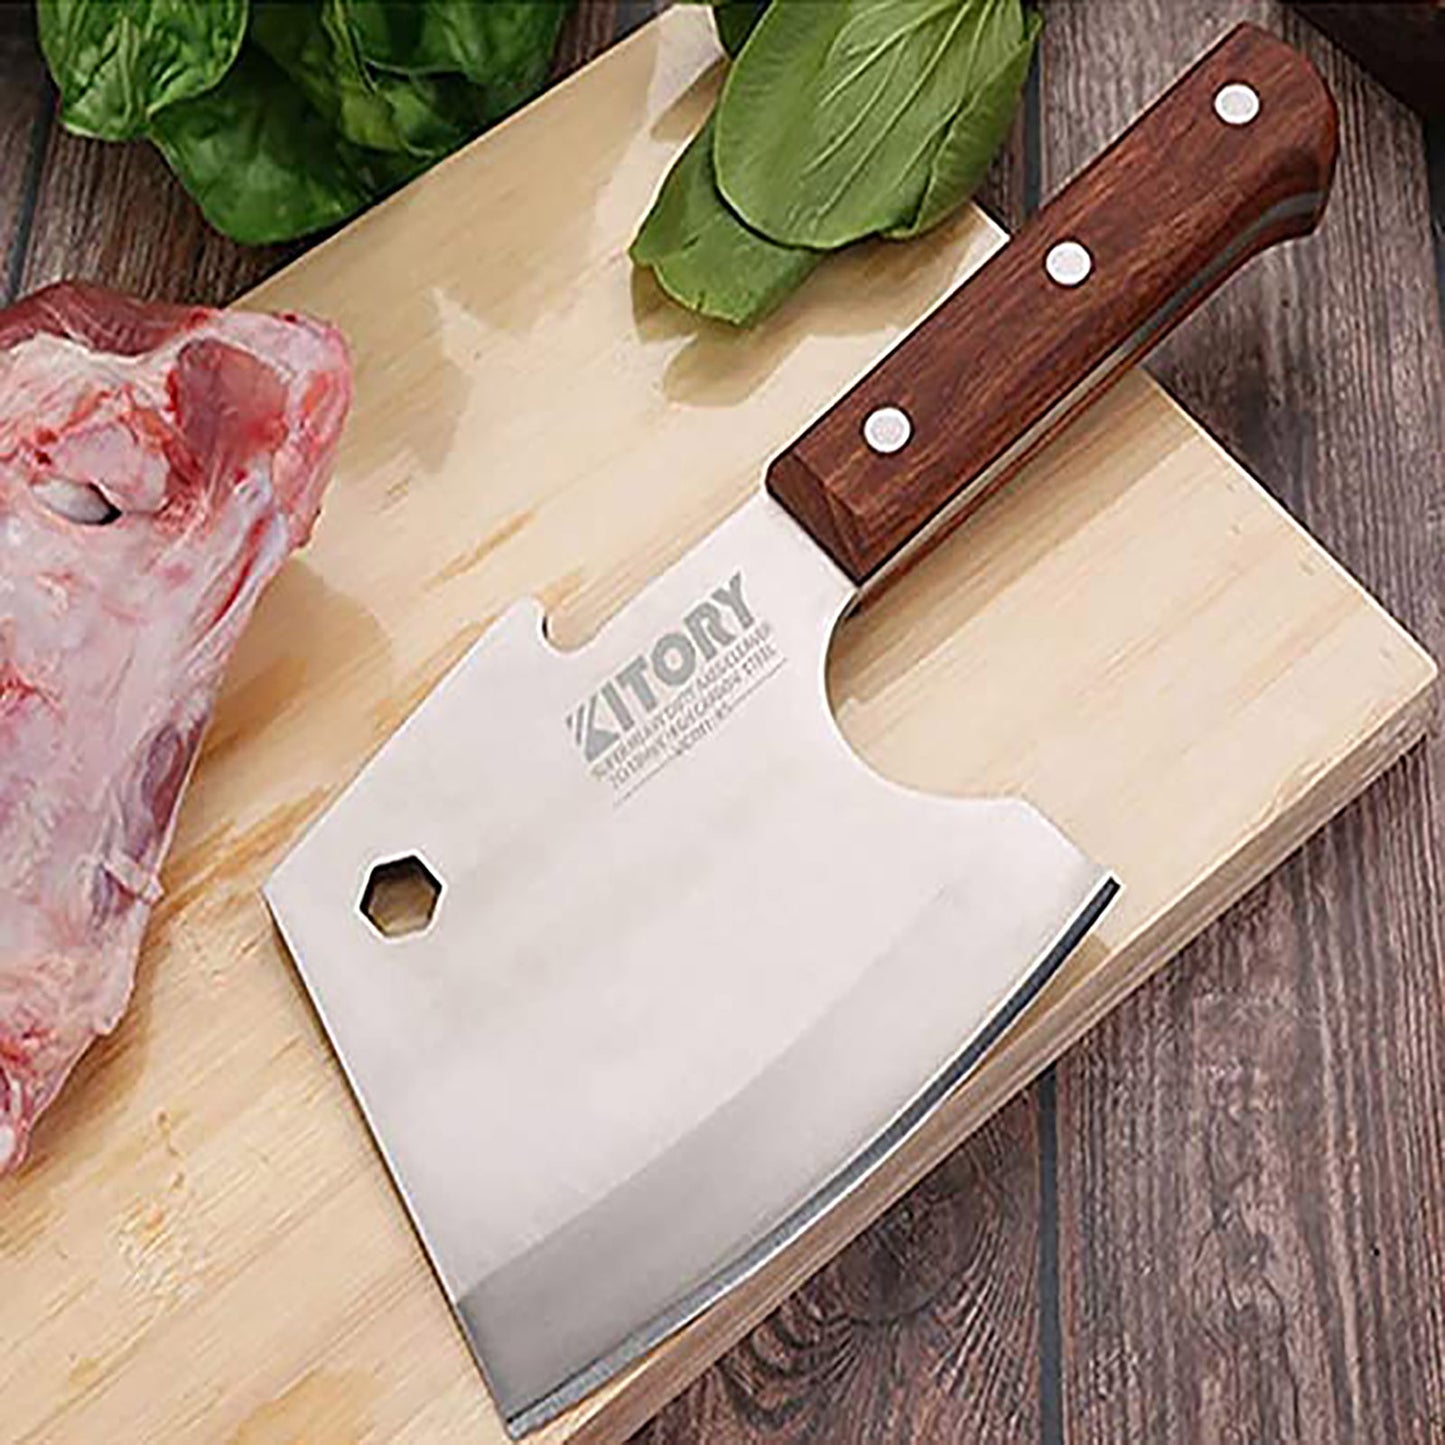 Kitory Professional Butcher’s Knife